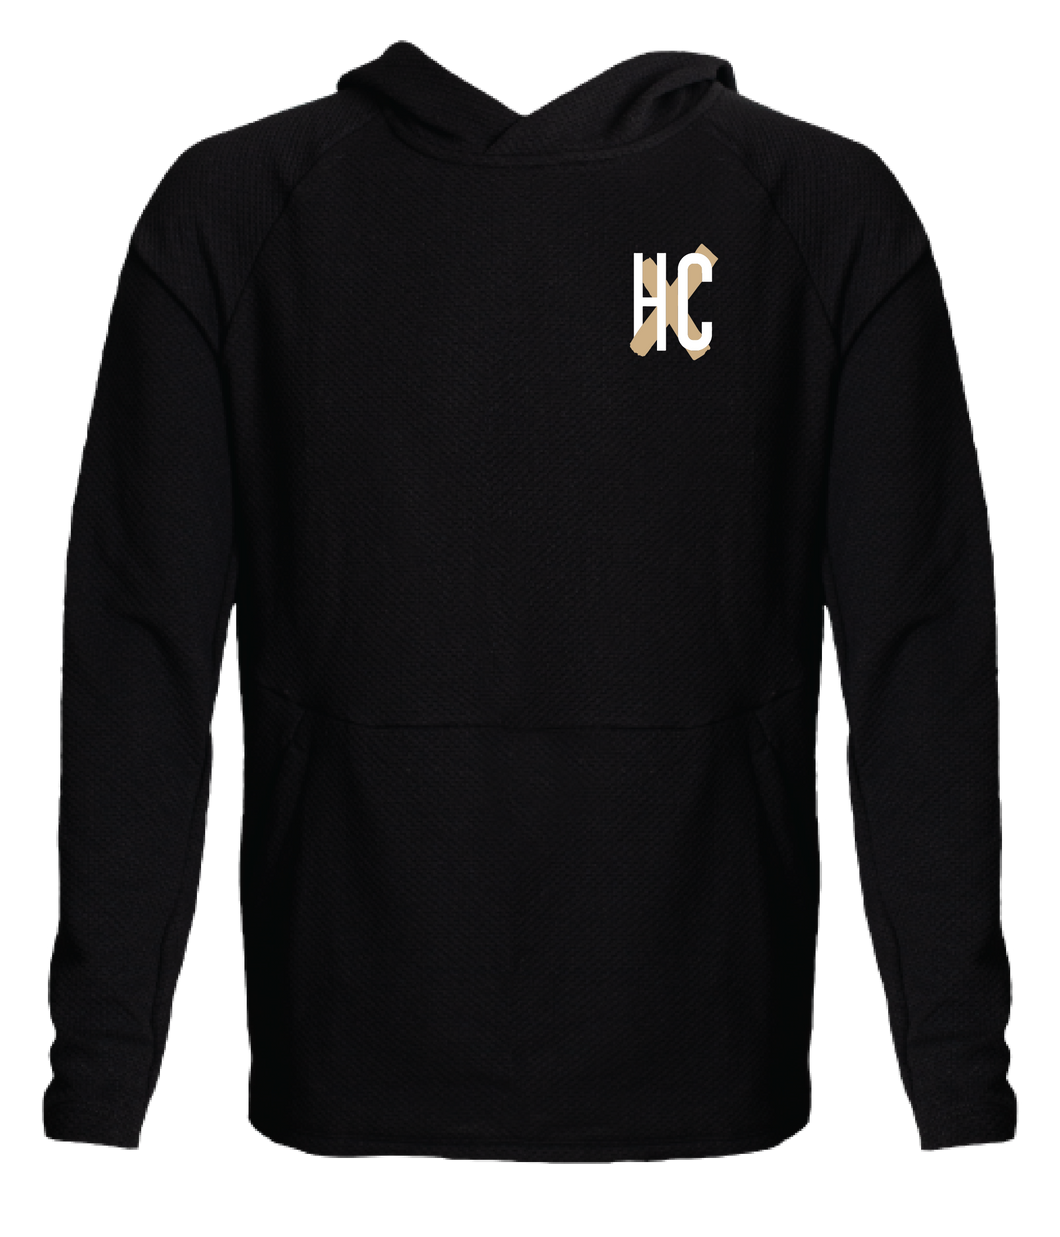 HC All Purpose Sweatshirt